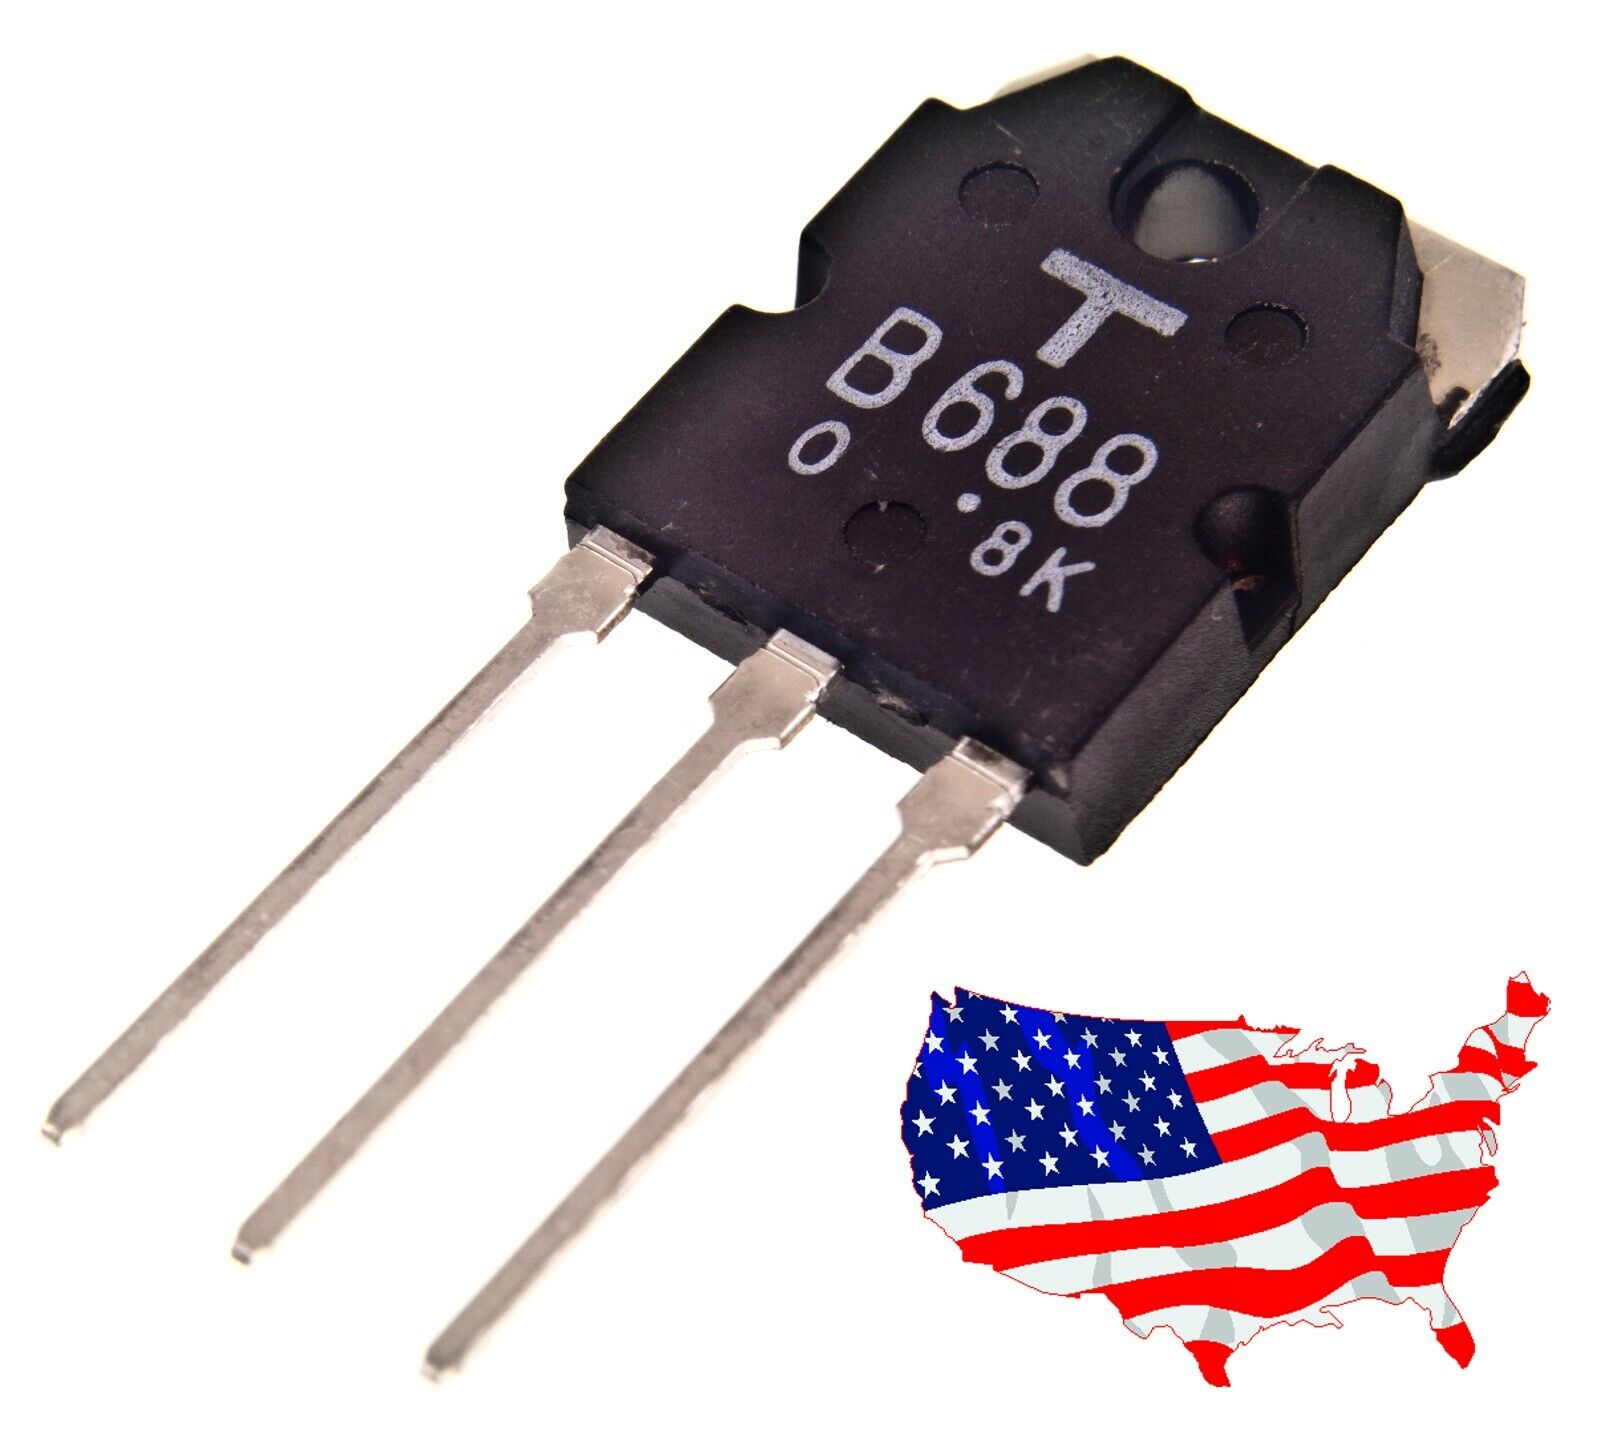 \' 2SB688 -O (2 pcs) Transistors - from USA